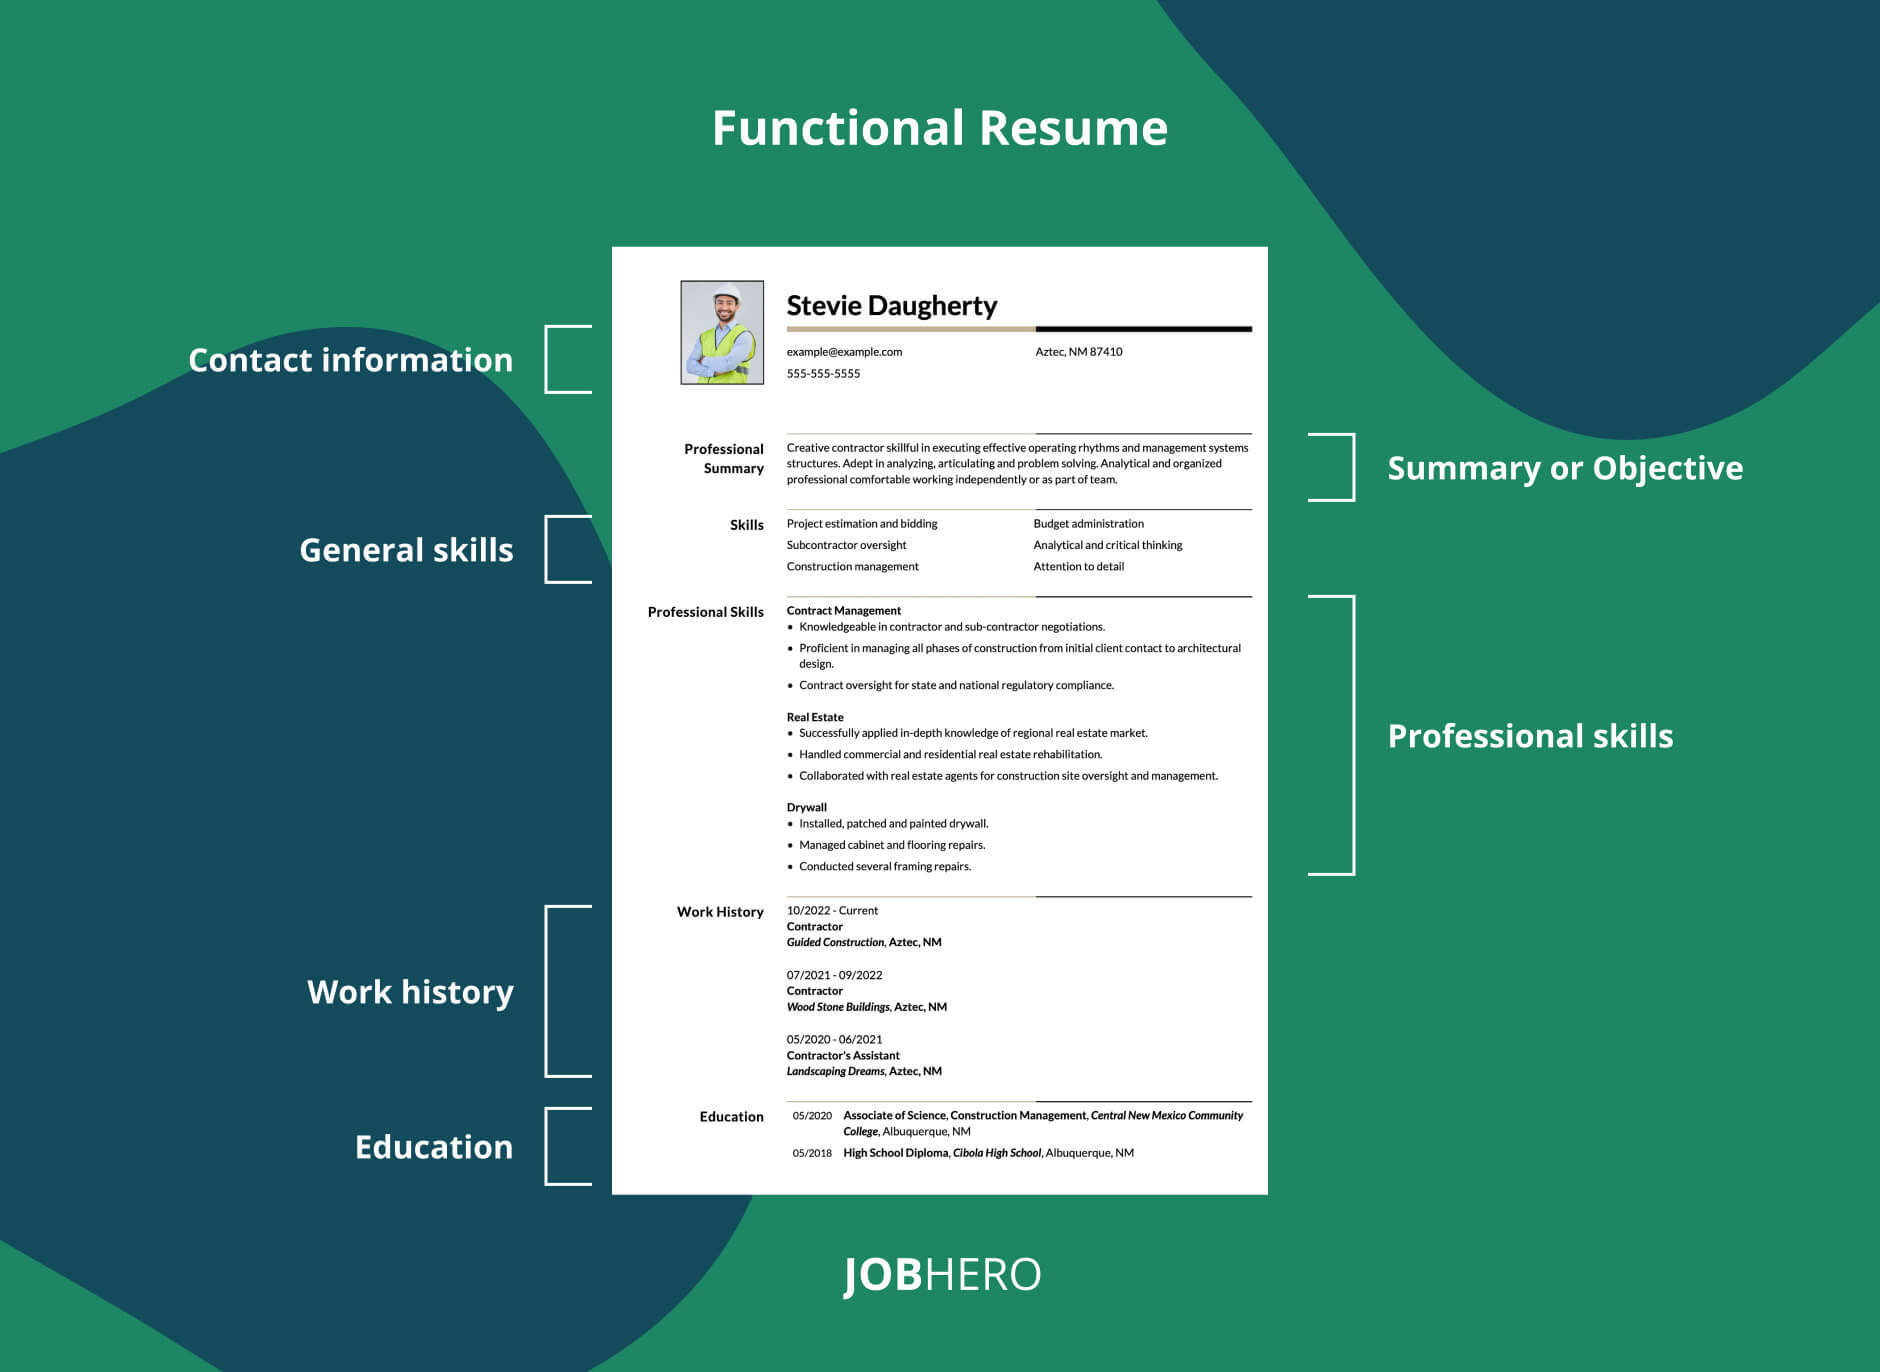 Functional Resume